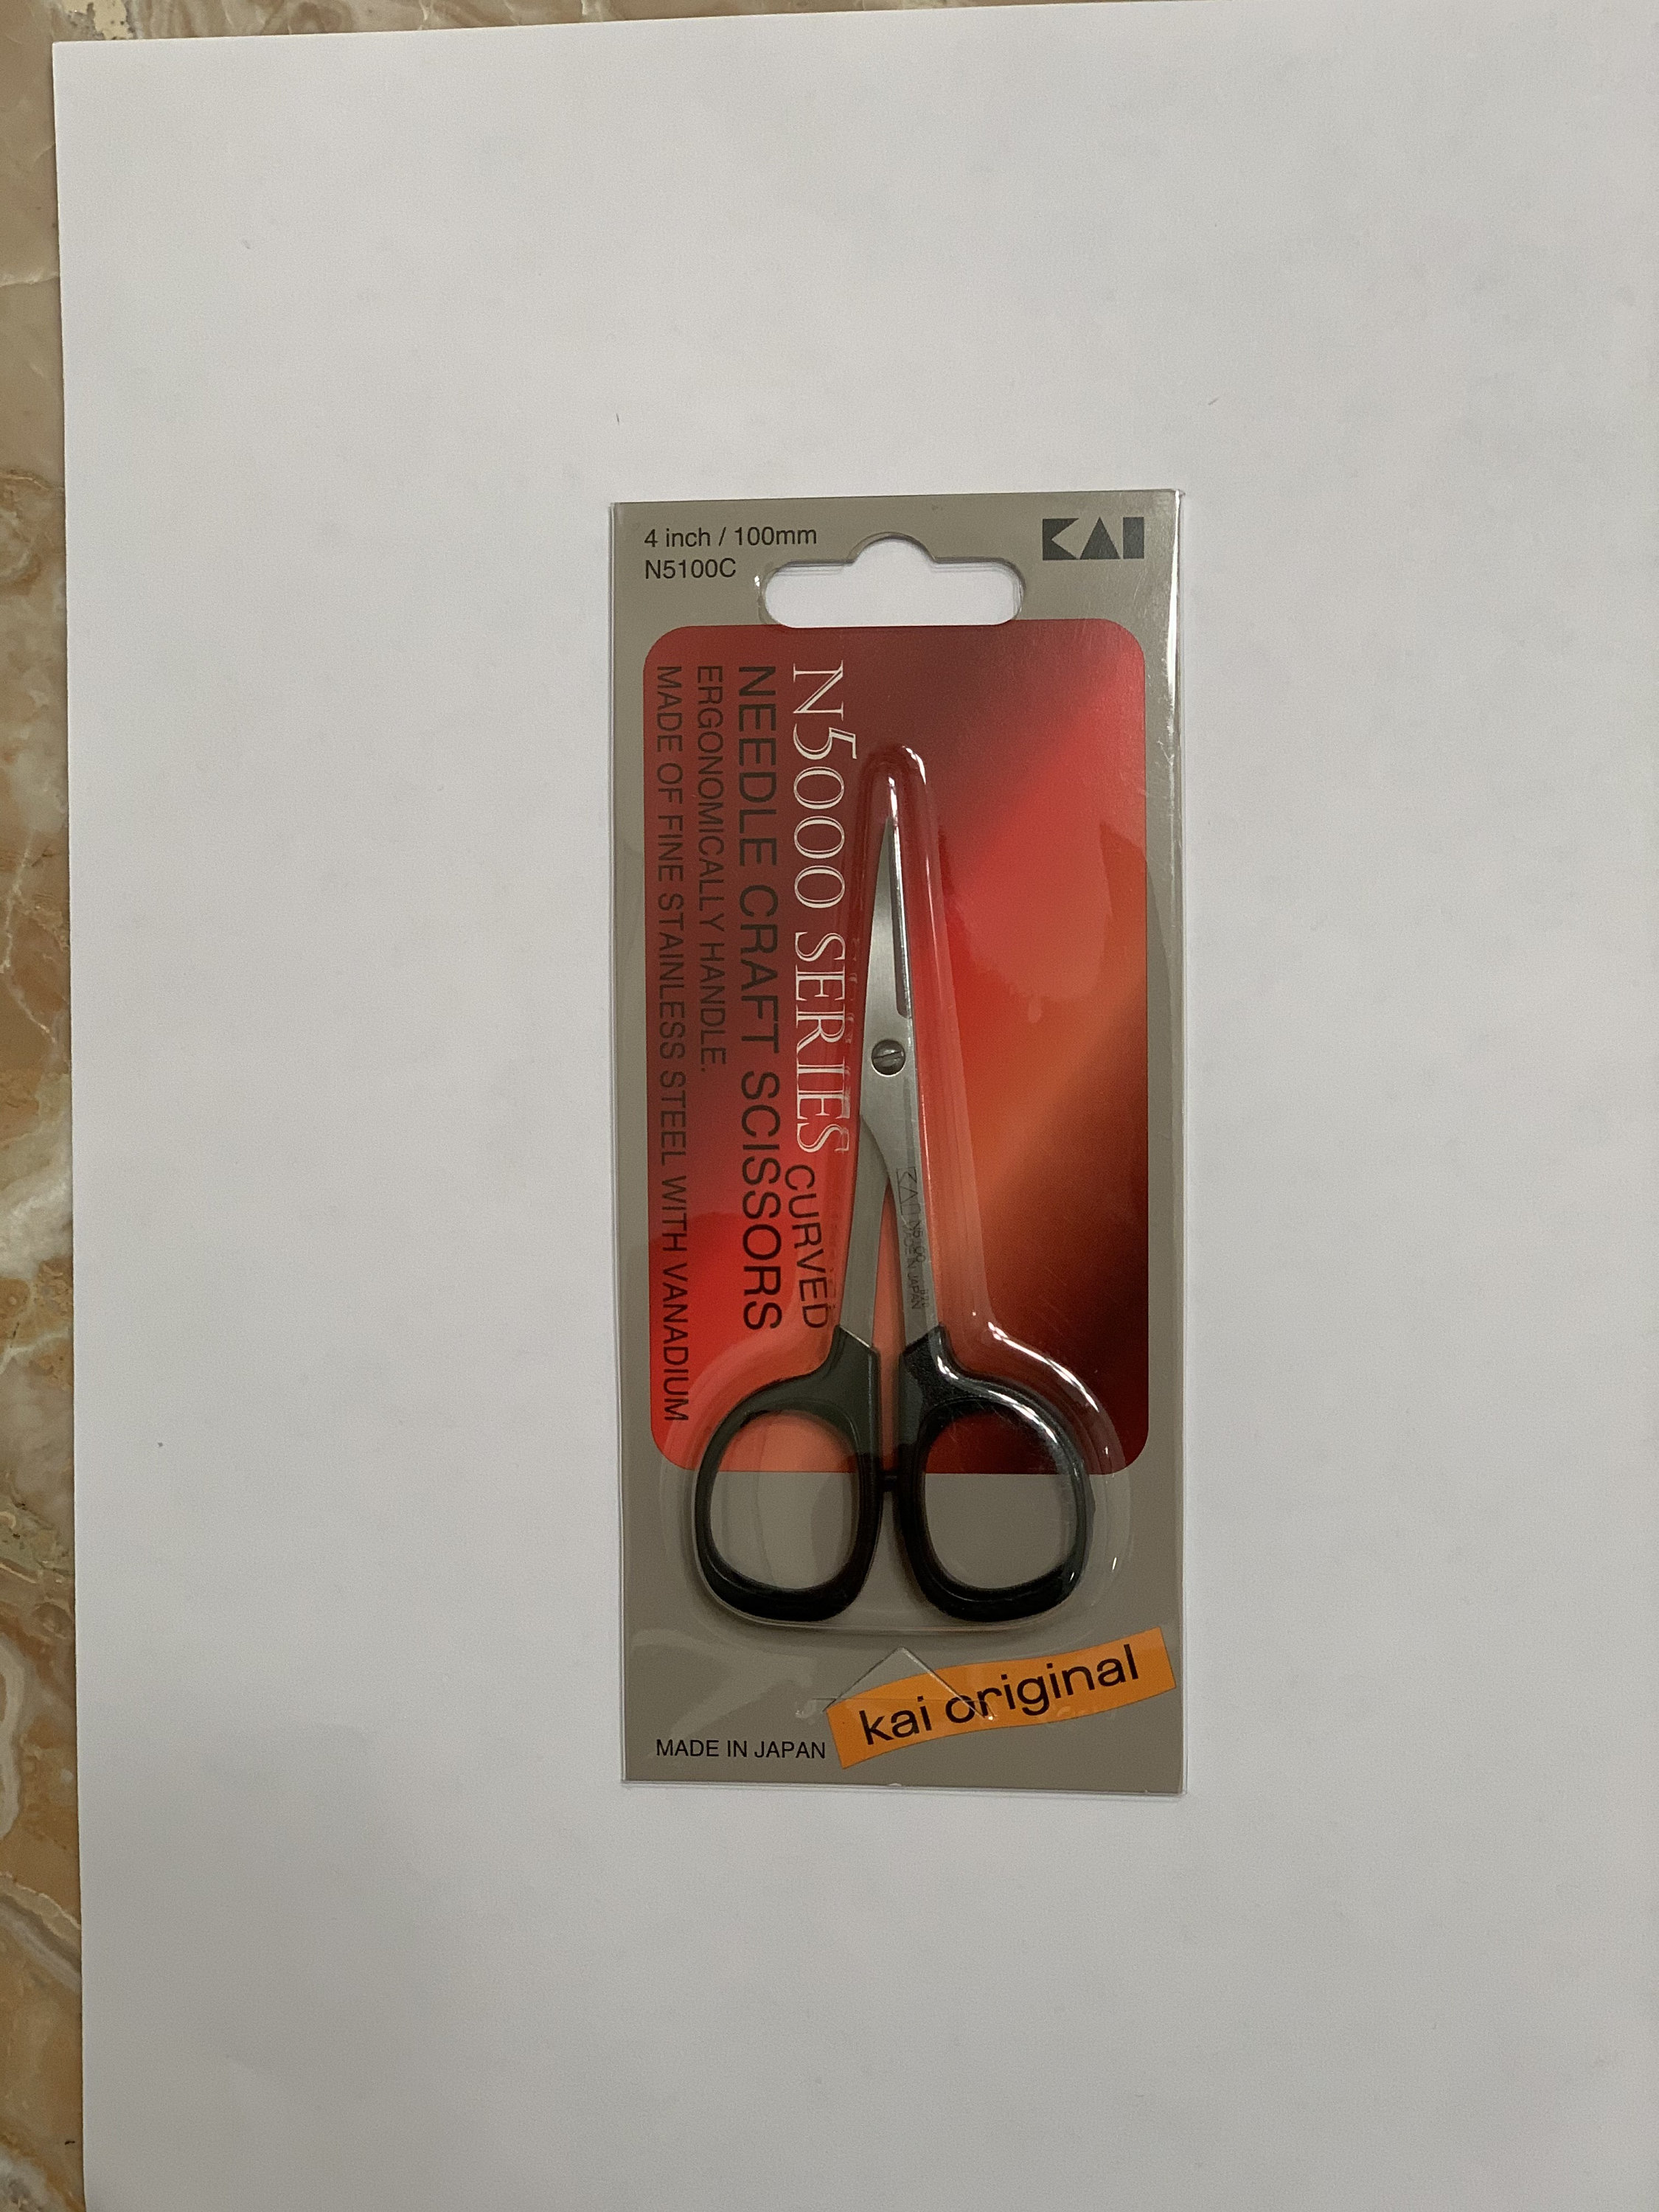 Curved Embroidery Scissor 4 N5100C Kai Scissors#1 - 49013315012534901331